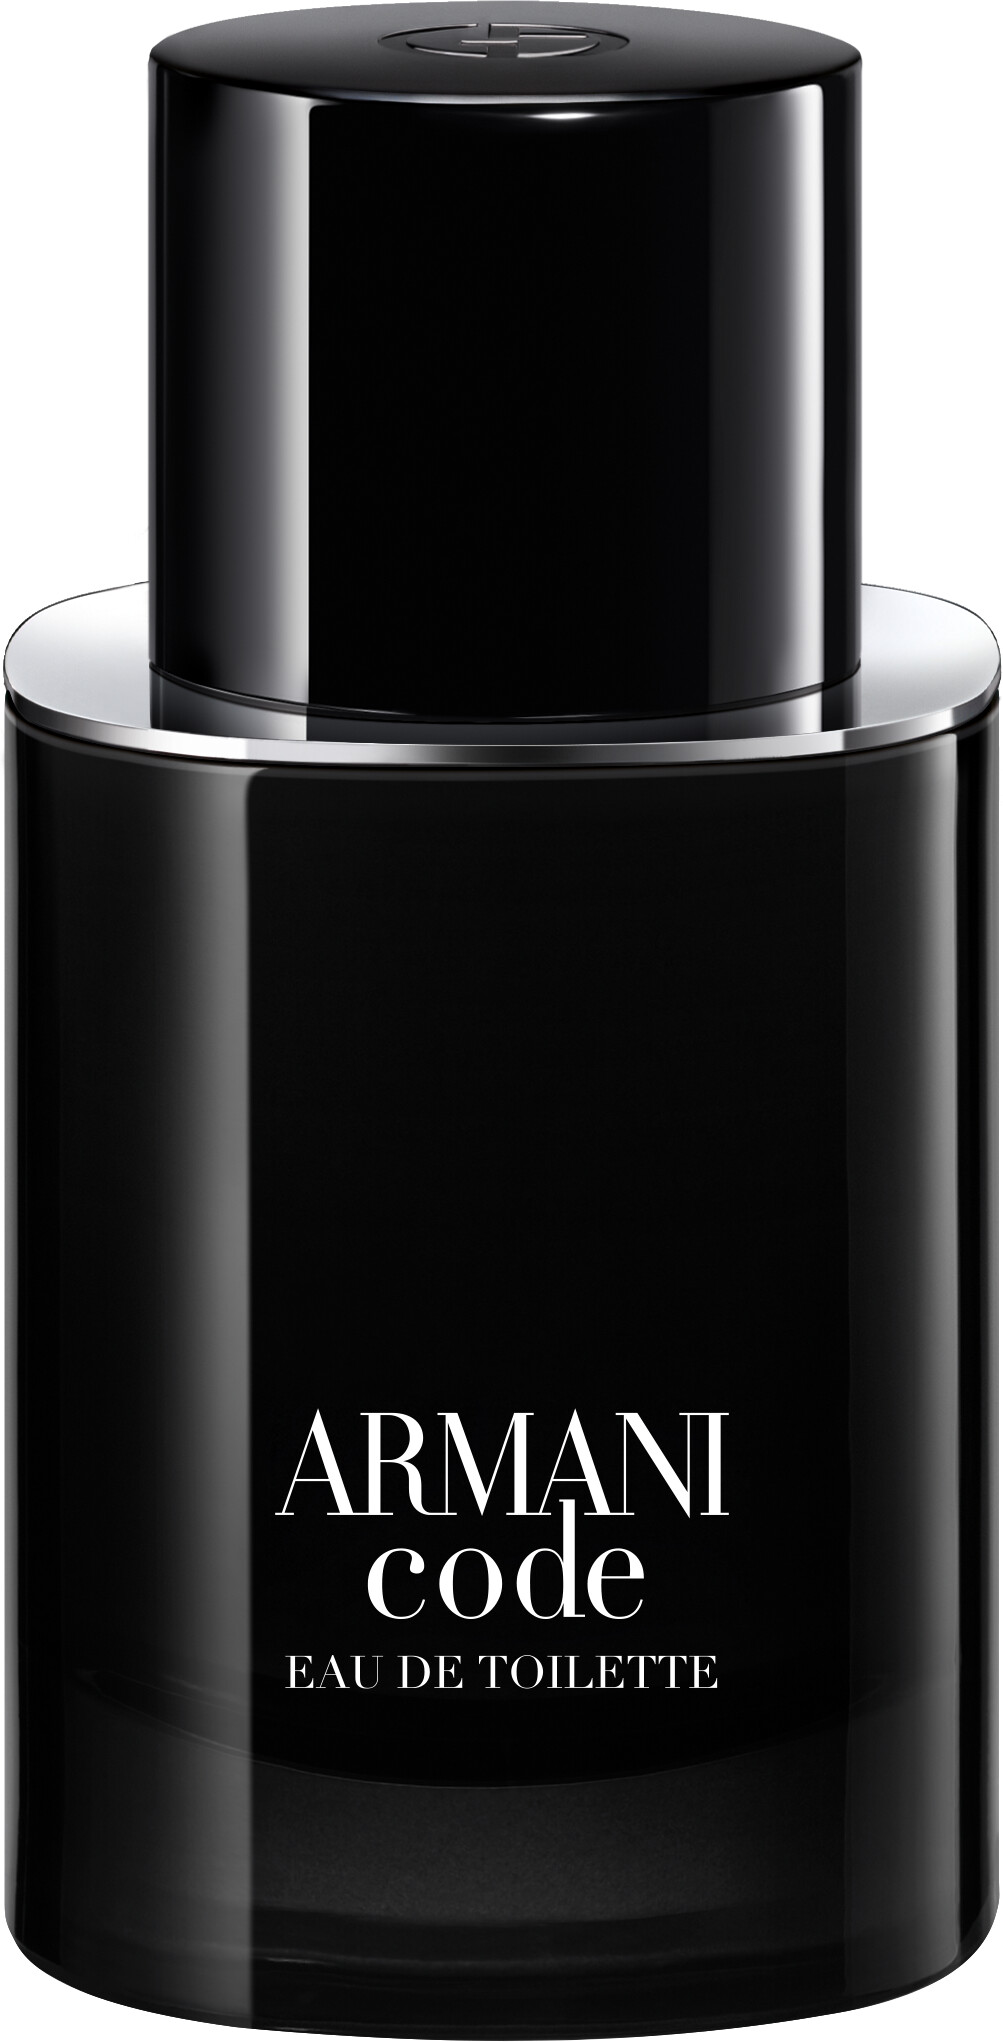 Giorgio Armani Code Eau de Toilette Refillable Spray 50ml